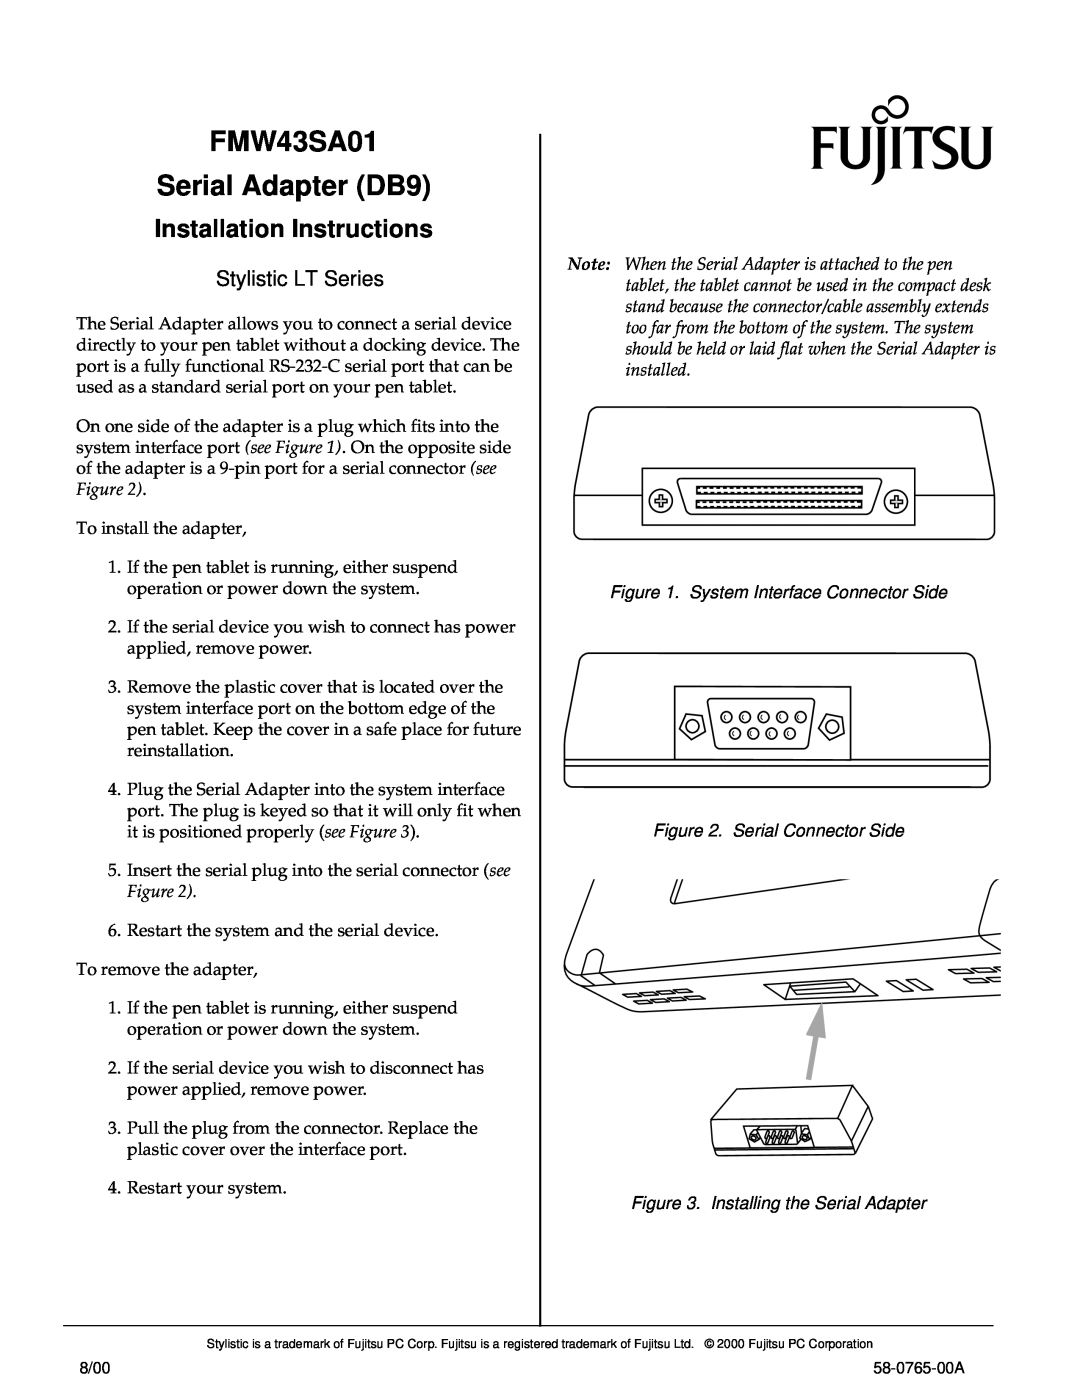 Fujitsu Siemens Computers installation instructions FMW43SA01 Serial Adapter DB9, Installation Instructions 